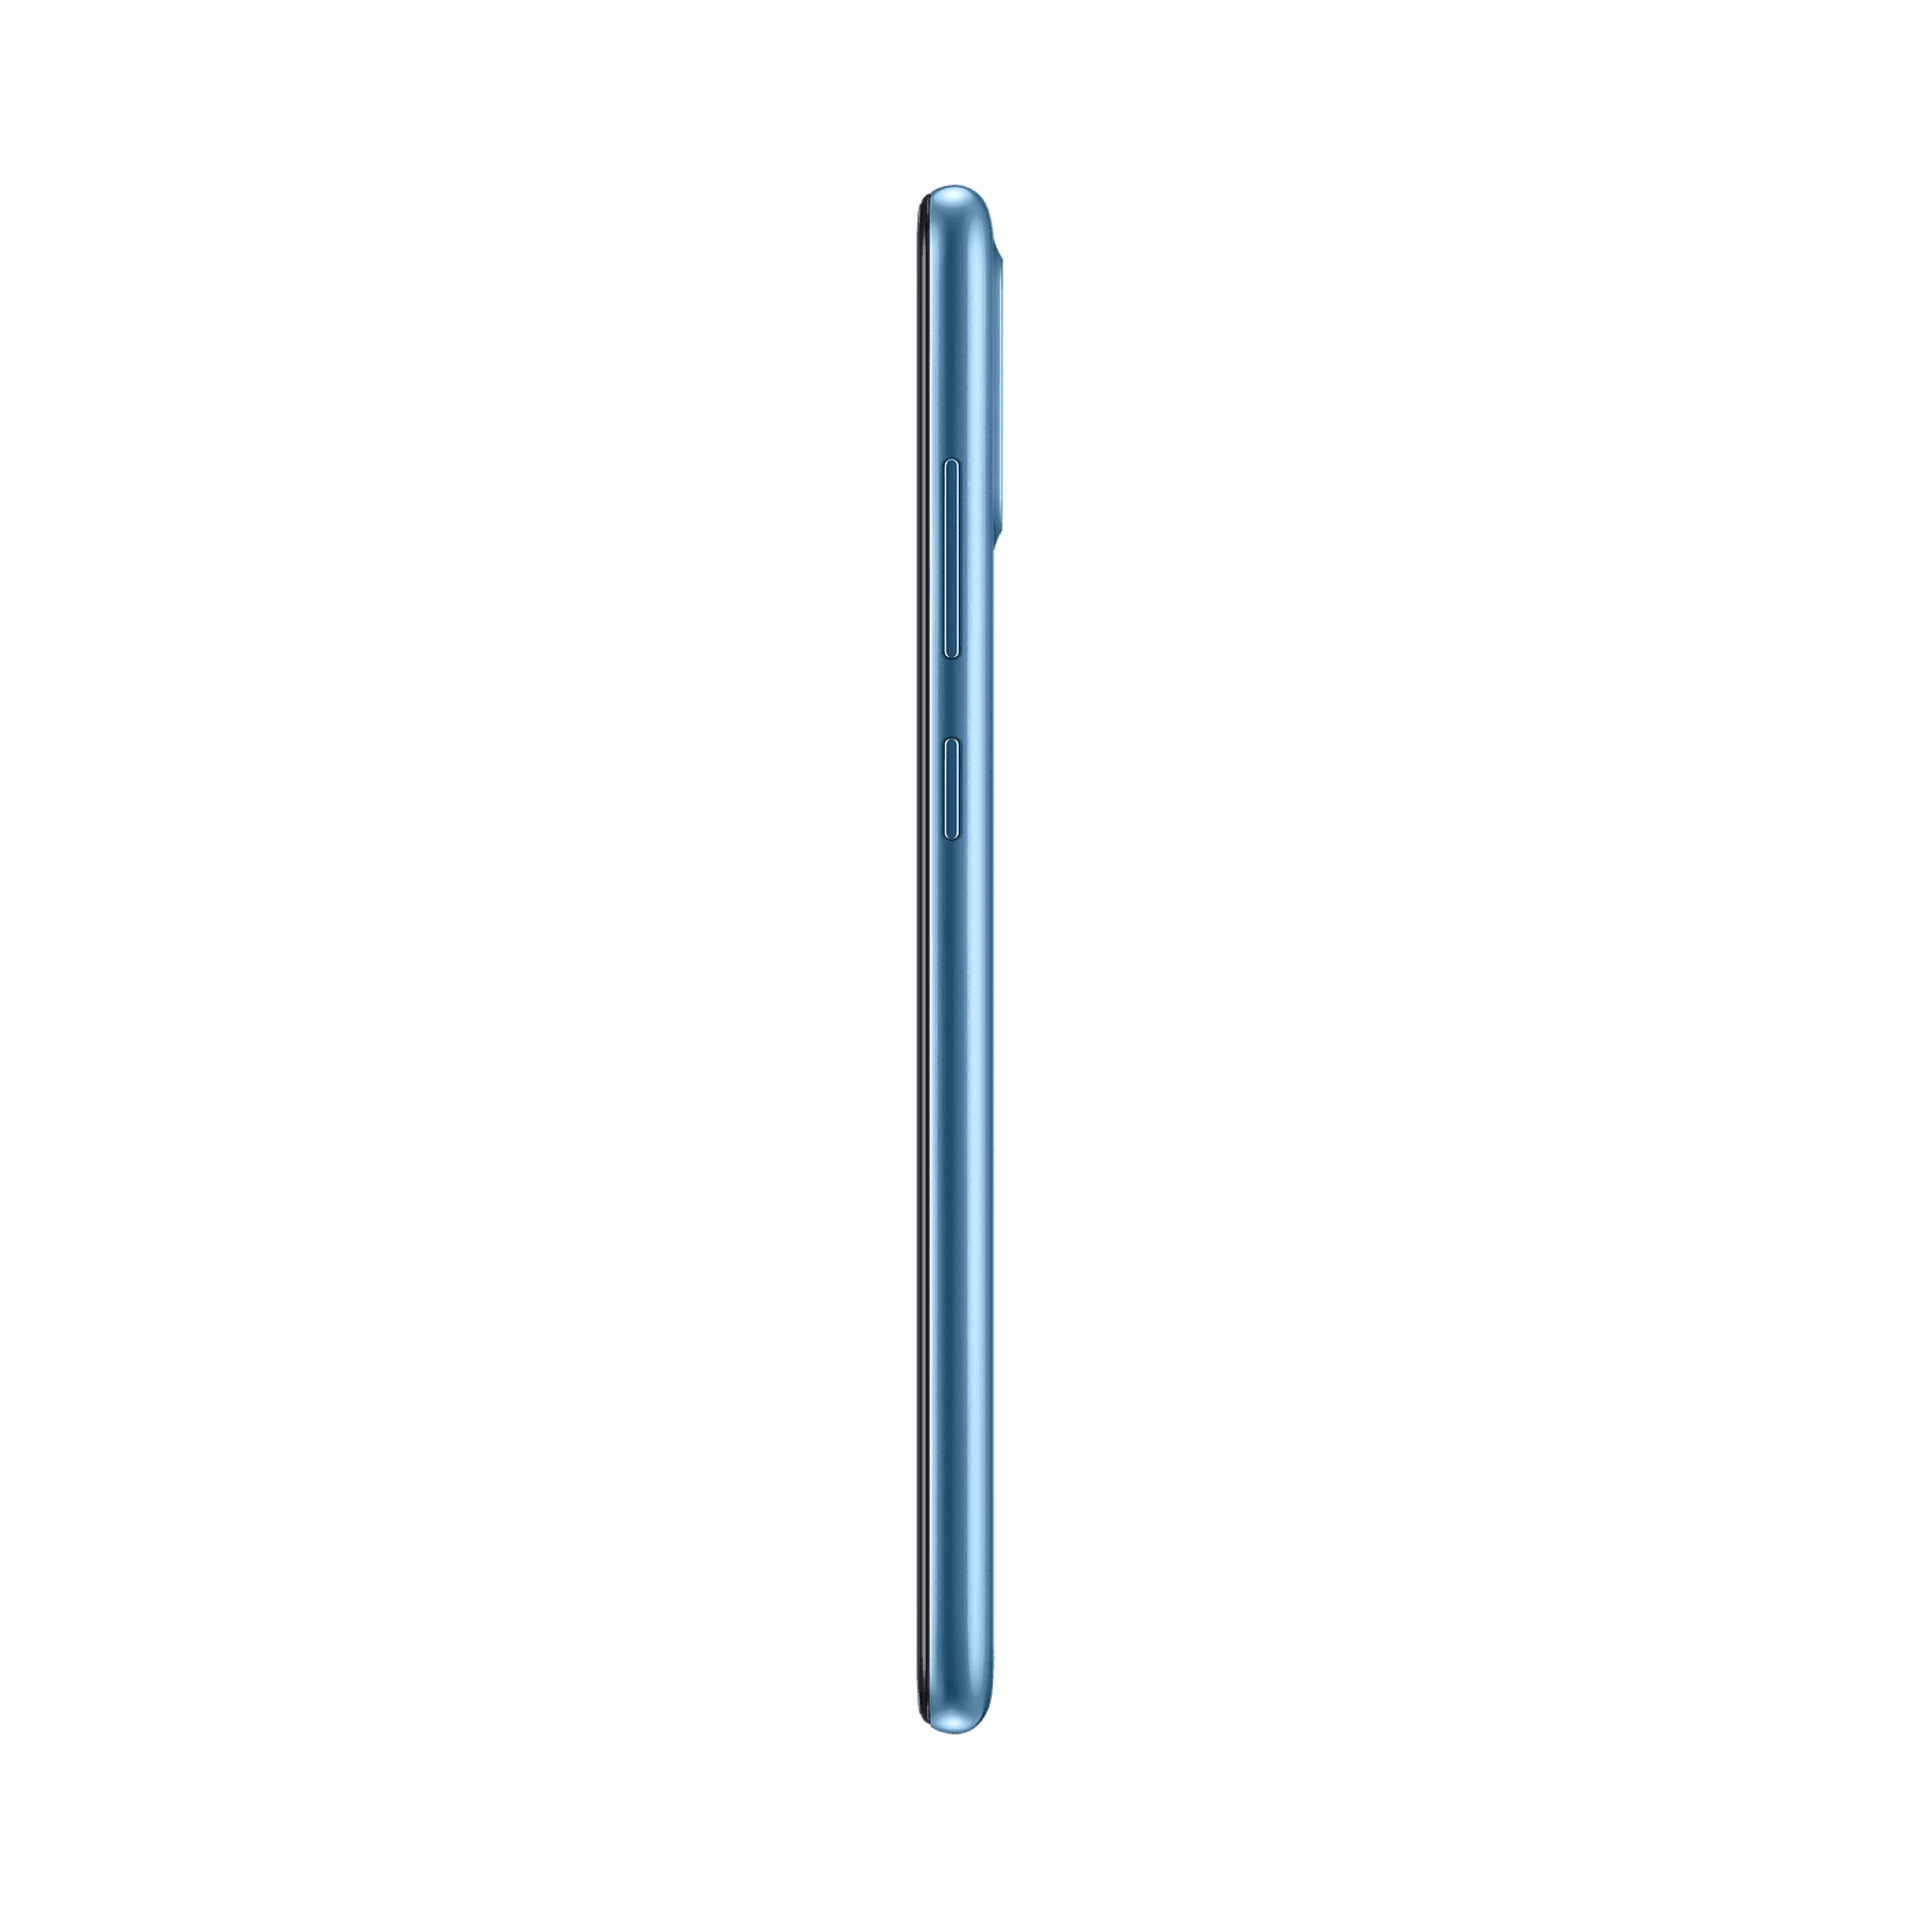 Samsung Galaxy A11 - 32 GB - Mavi